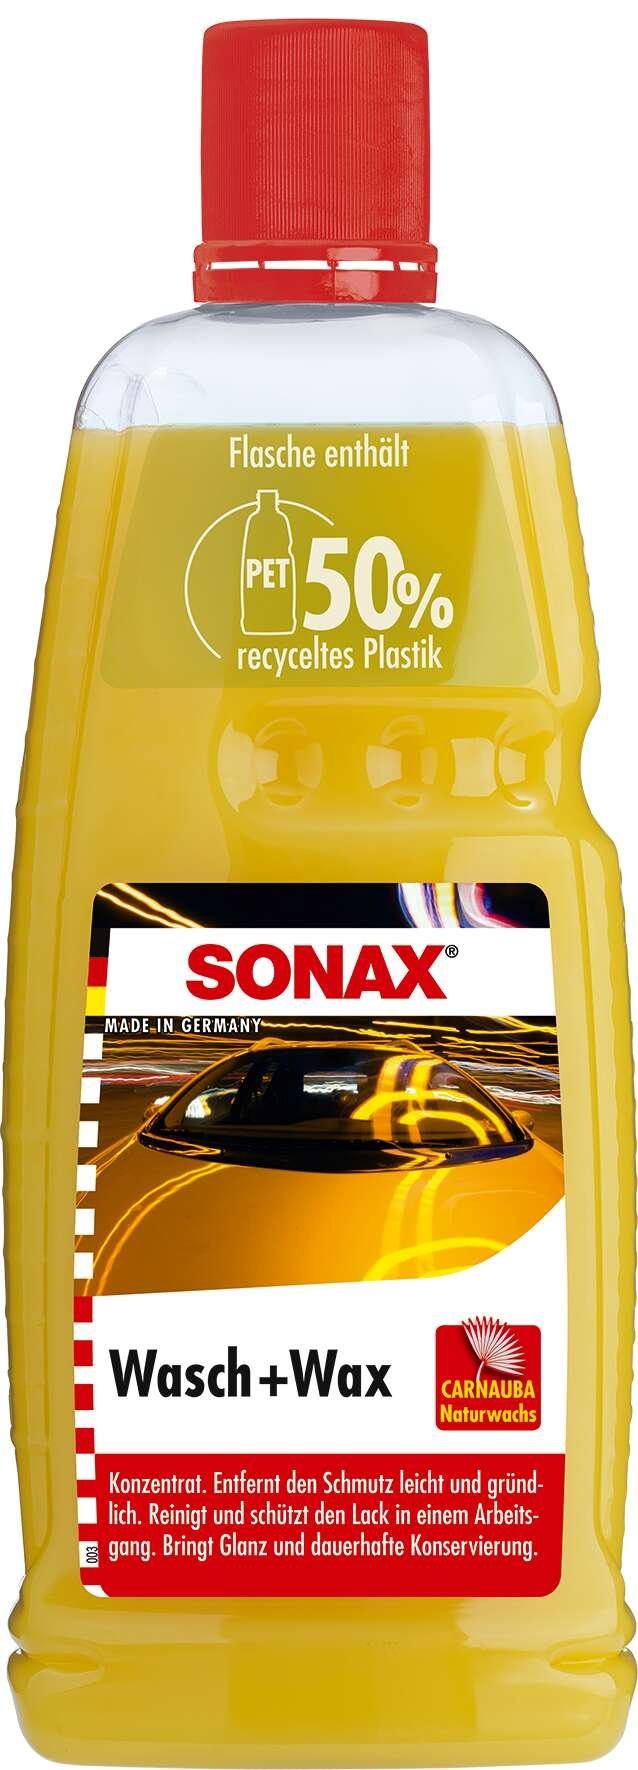 SONAX Wash + Wax flacone PET da 1000 ml